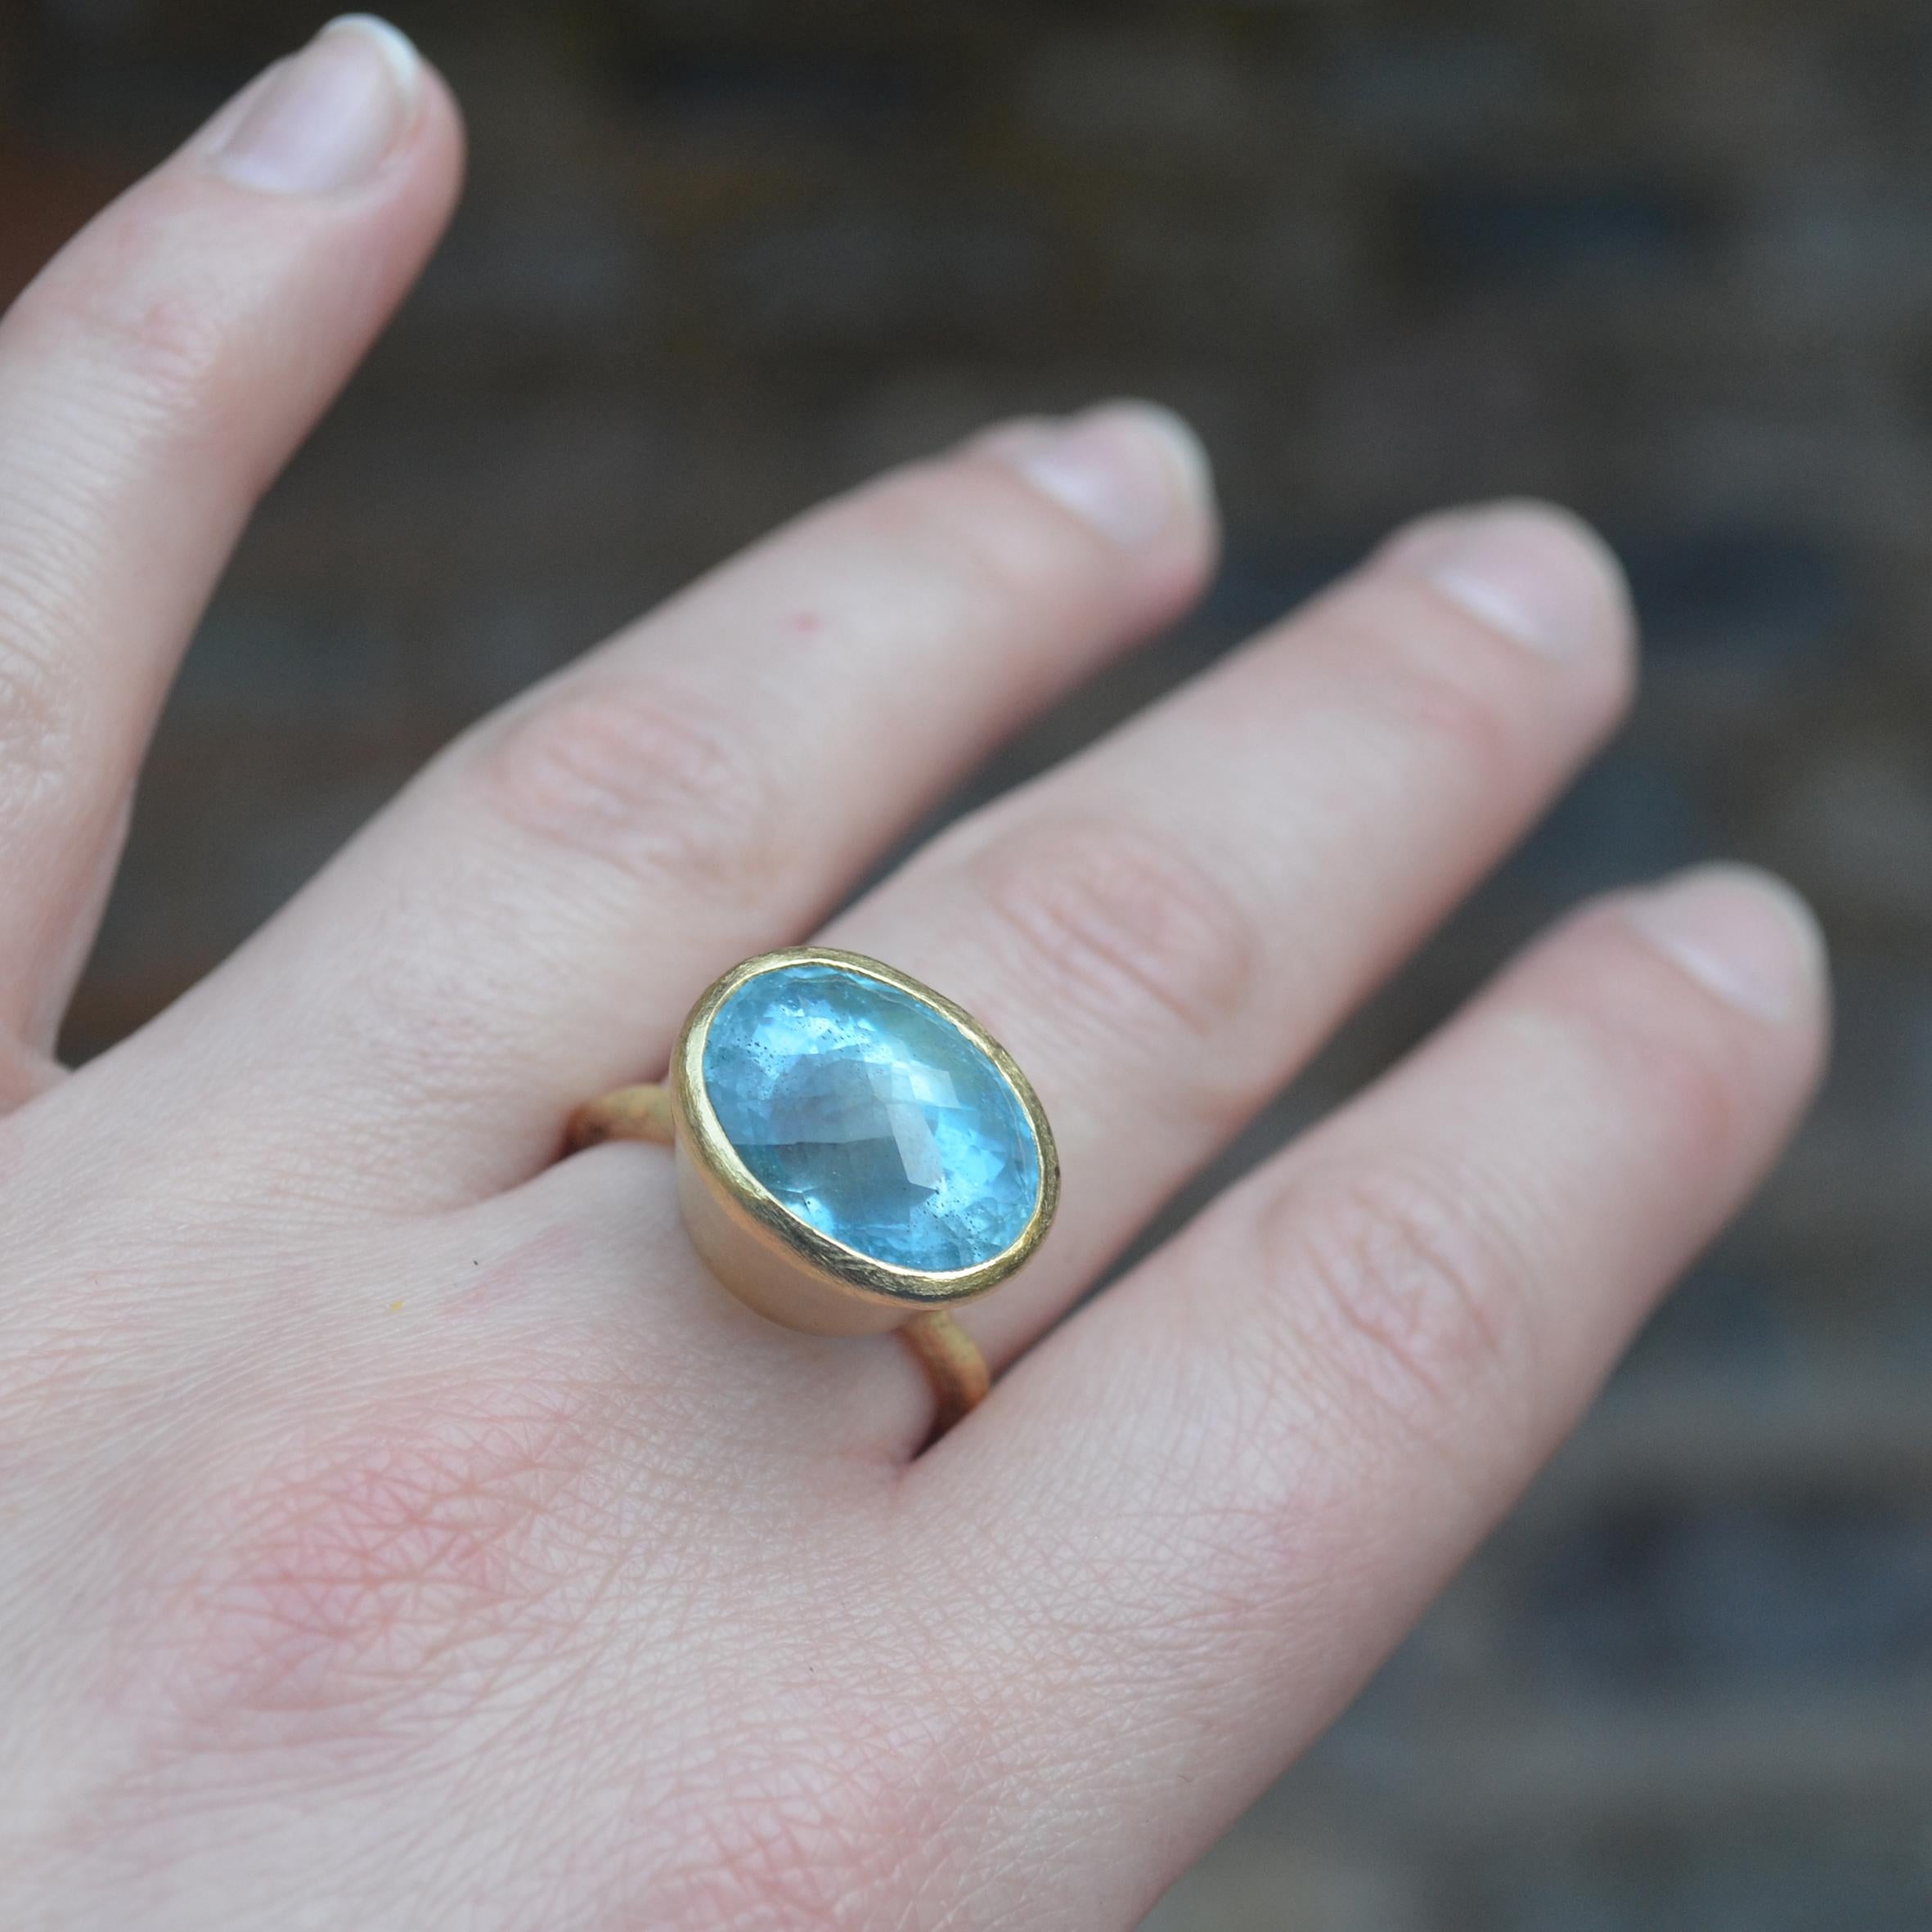 Oval Cut Deep Blue Aquamarine 18 Karat Gold Ring Handmade by Disa Allsopp For Sale